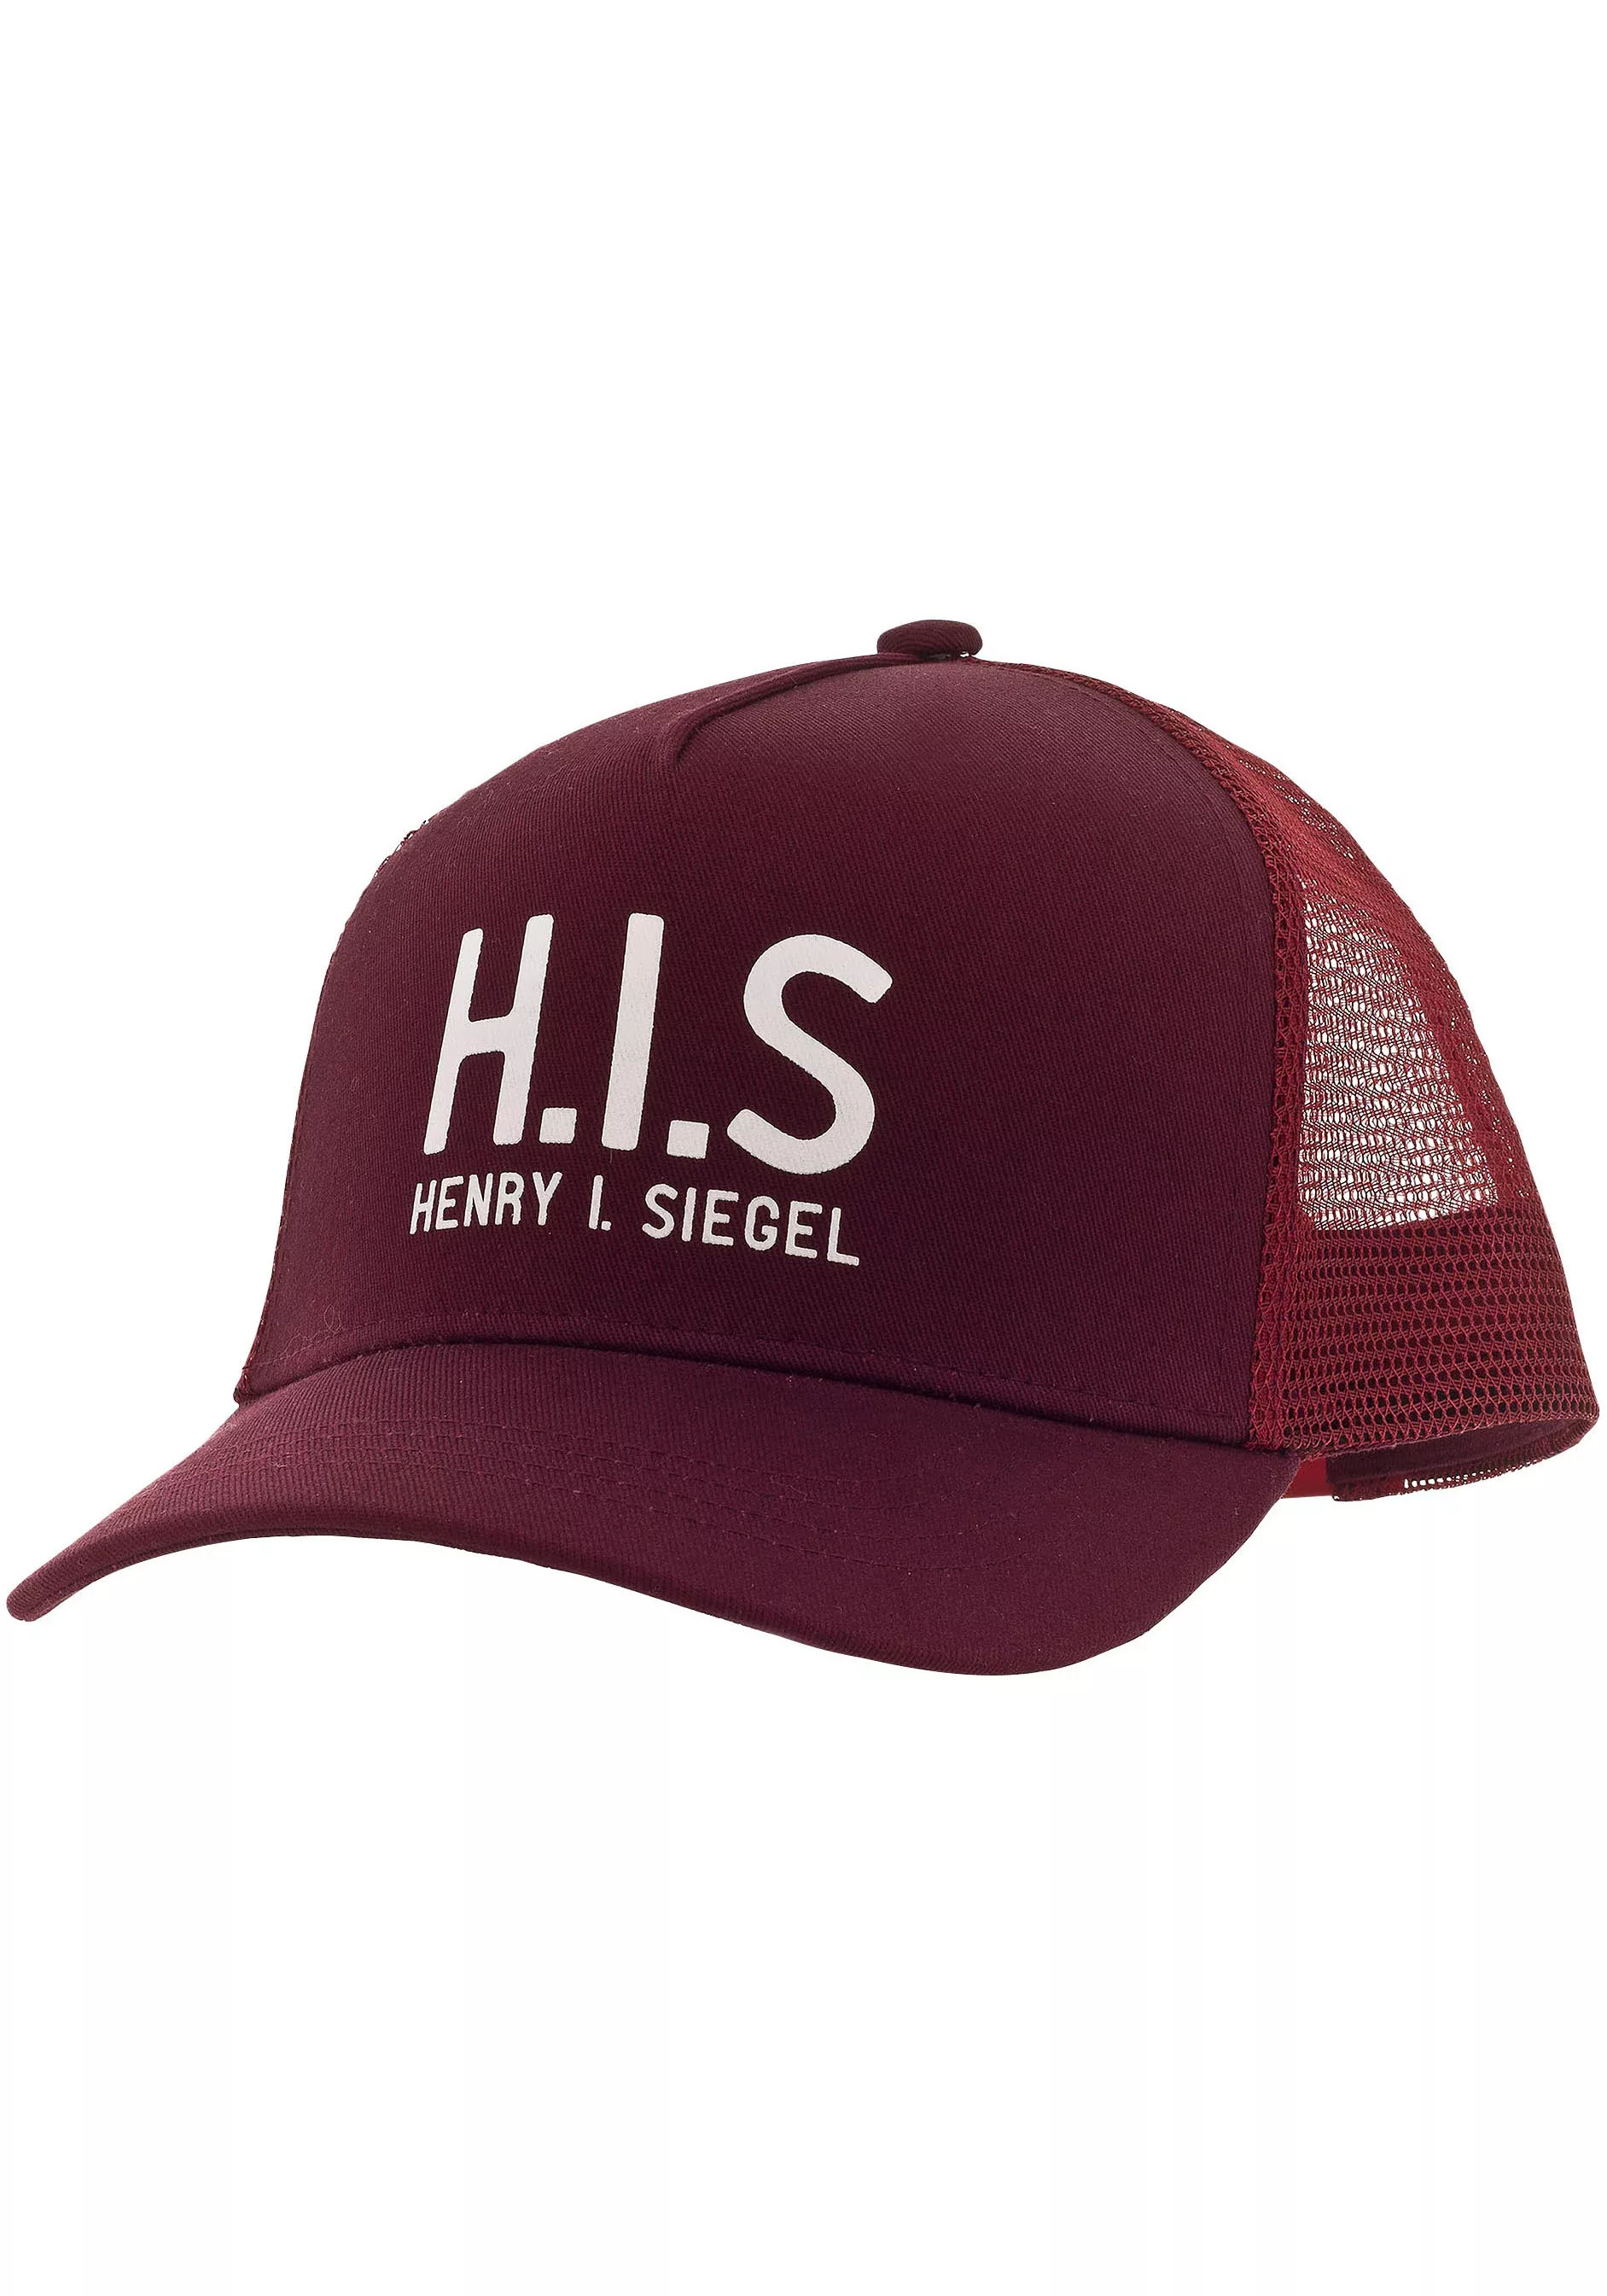 H.I.S Baseball Cap, Mesh-Cap mit H.I.S.-Print günstig online kaufen